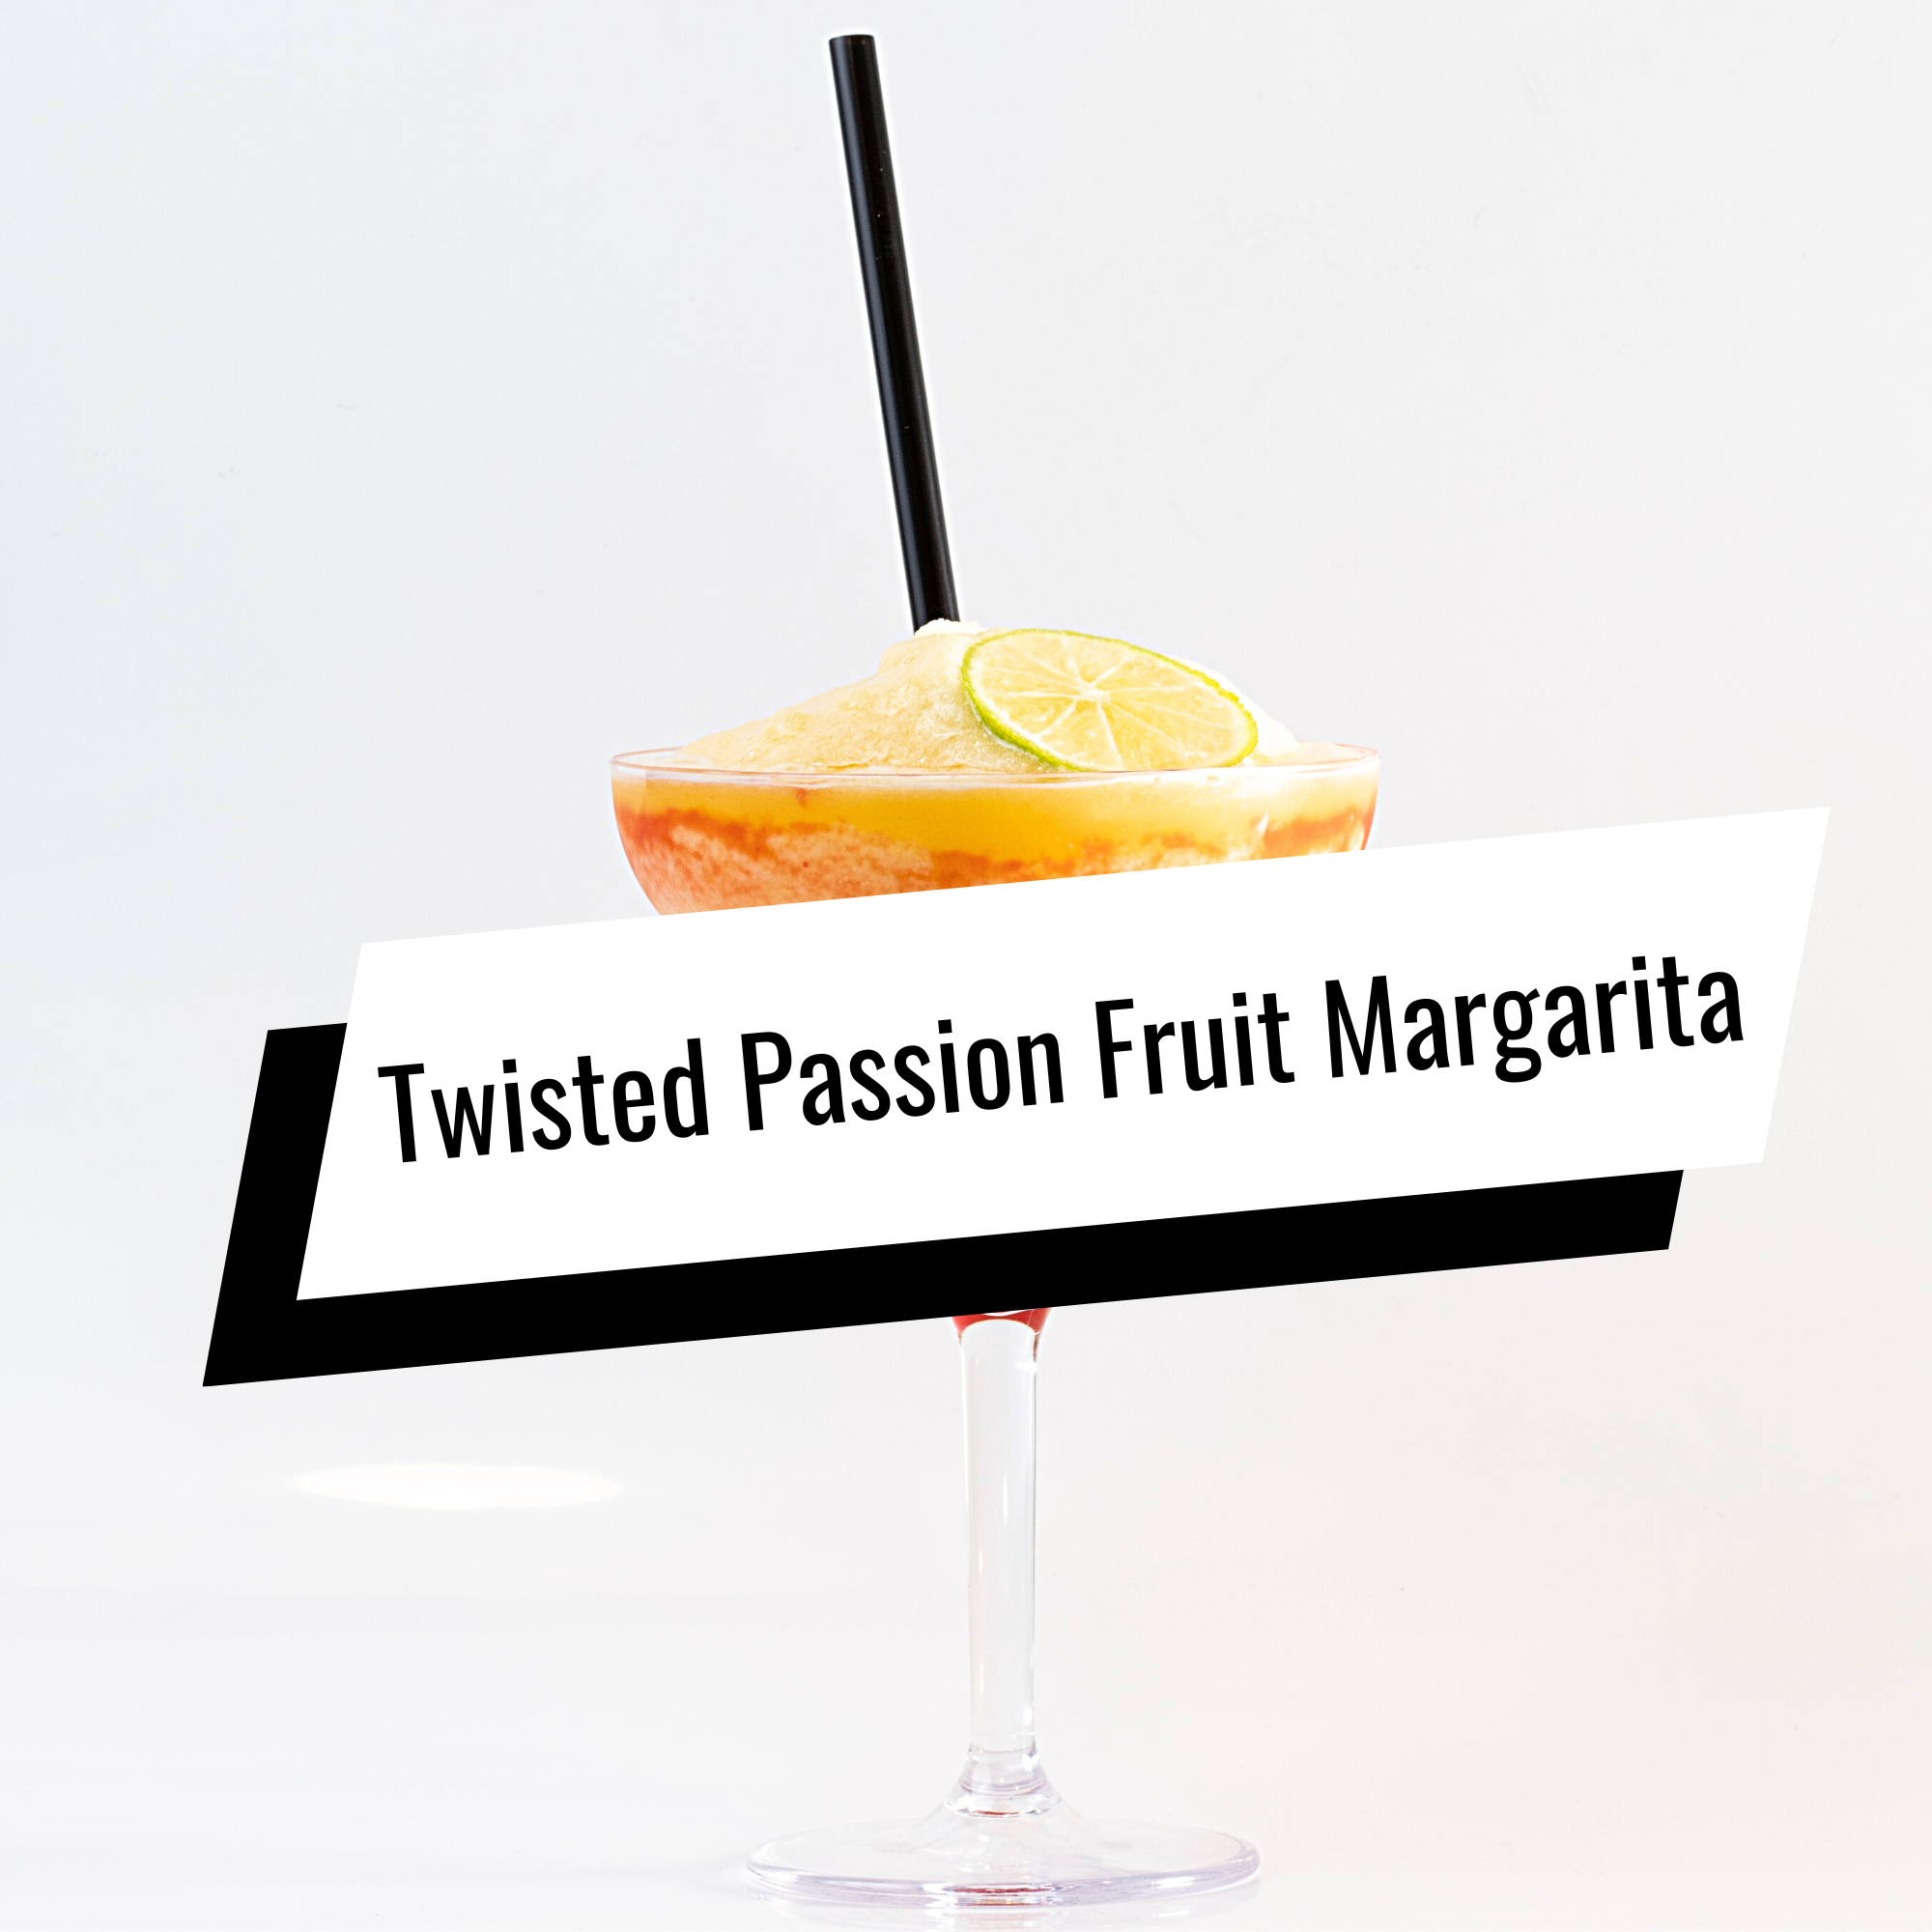 Twisted Passion Fruit Margarita